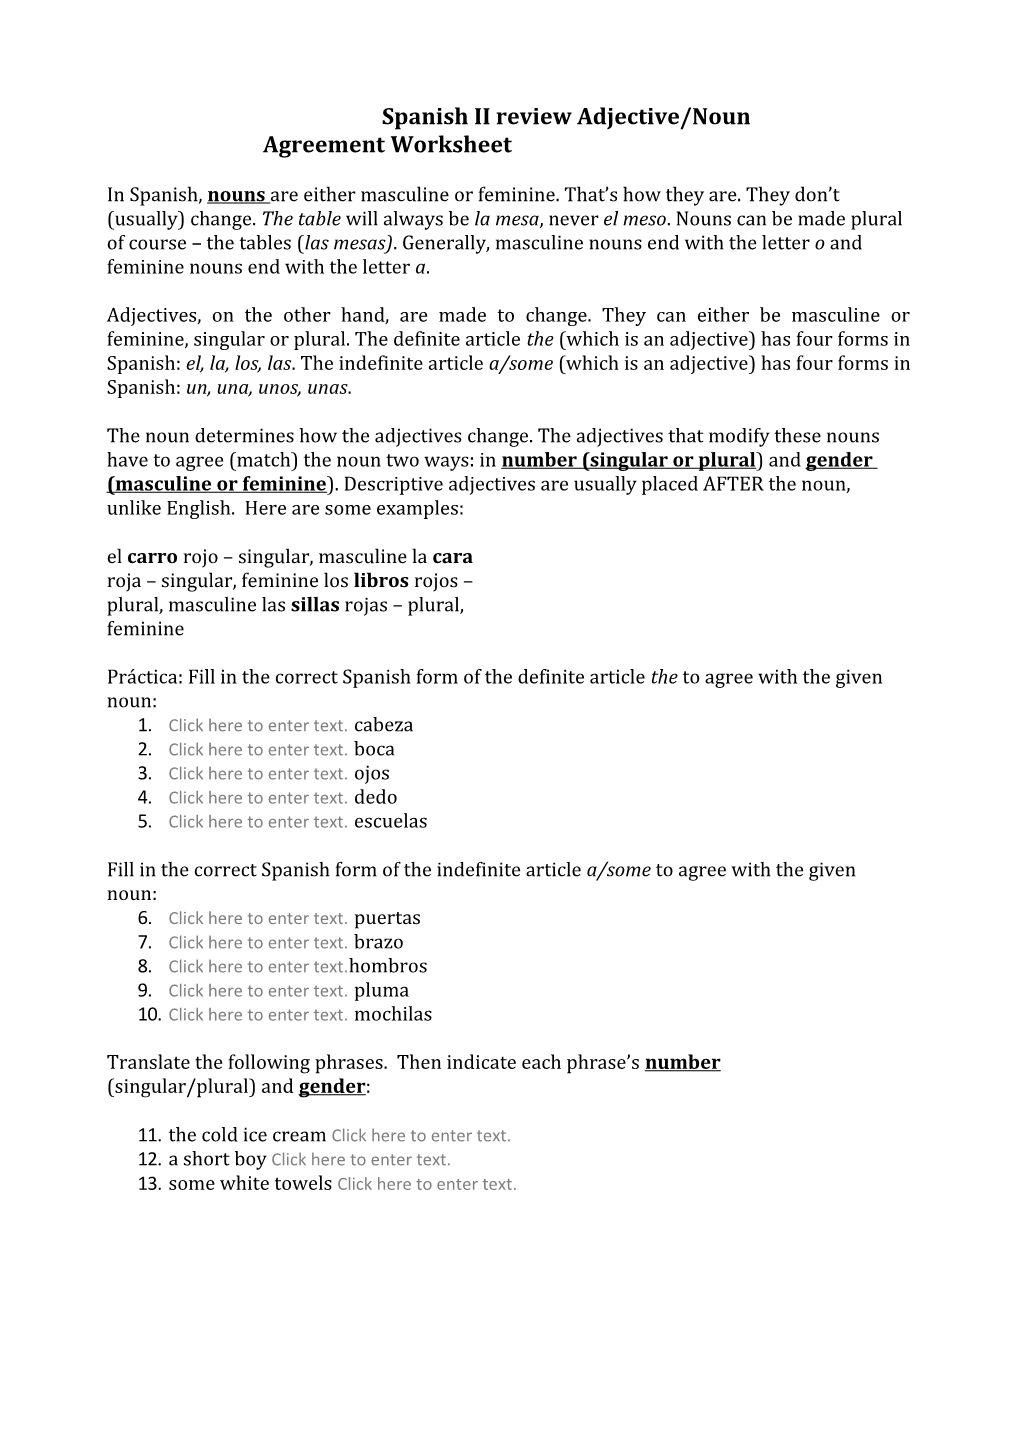 Spanish II Review Adjective/Noun Agreement Worksheet